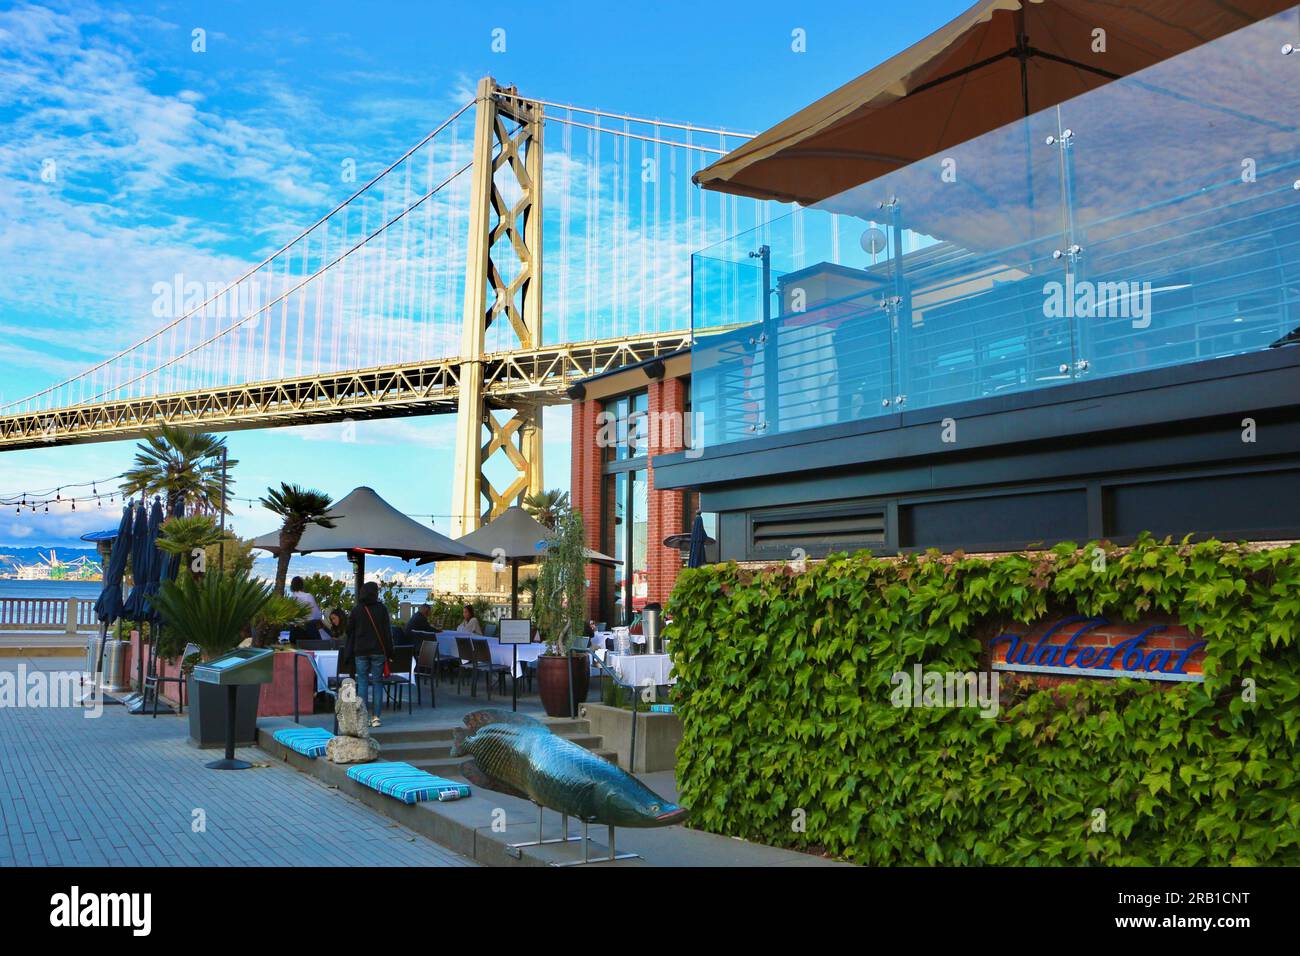 Waterbar Restaurant next to Bay Bridge 399 The Embarcadero San Francisco California USA Stock Photo